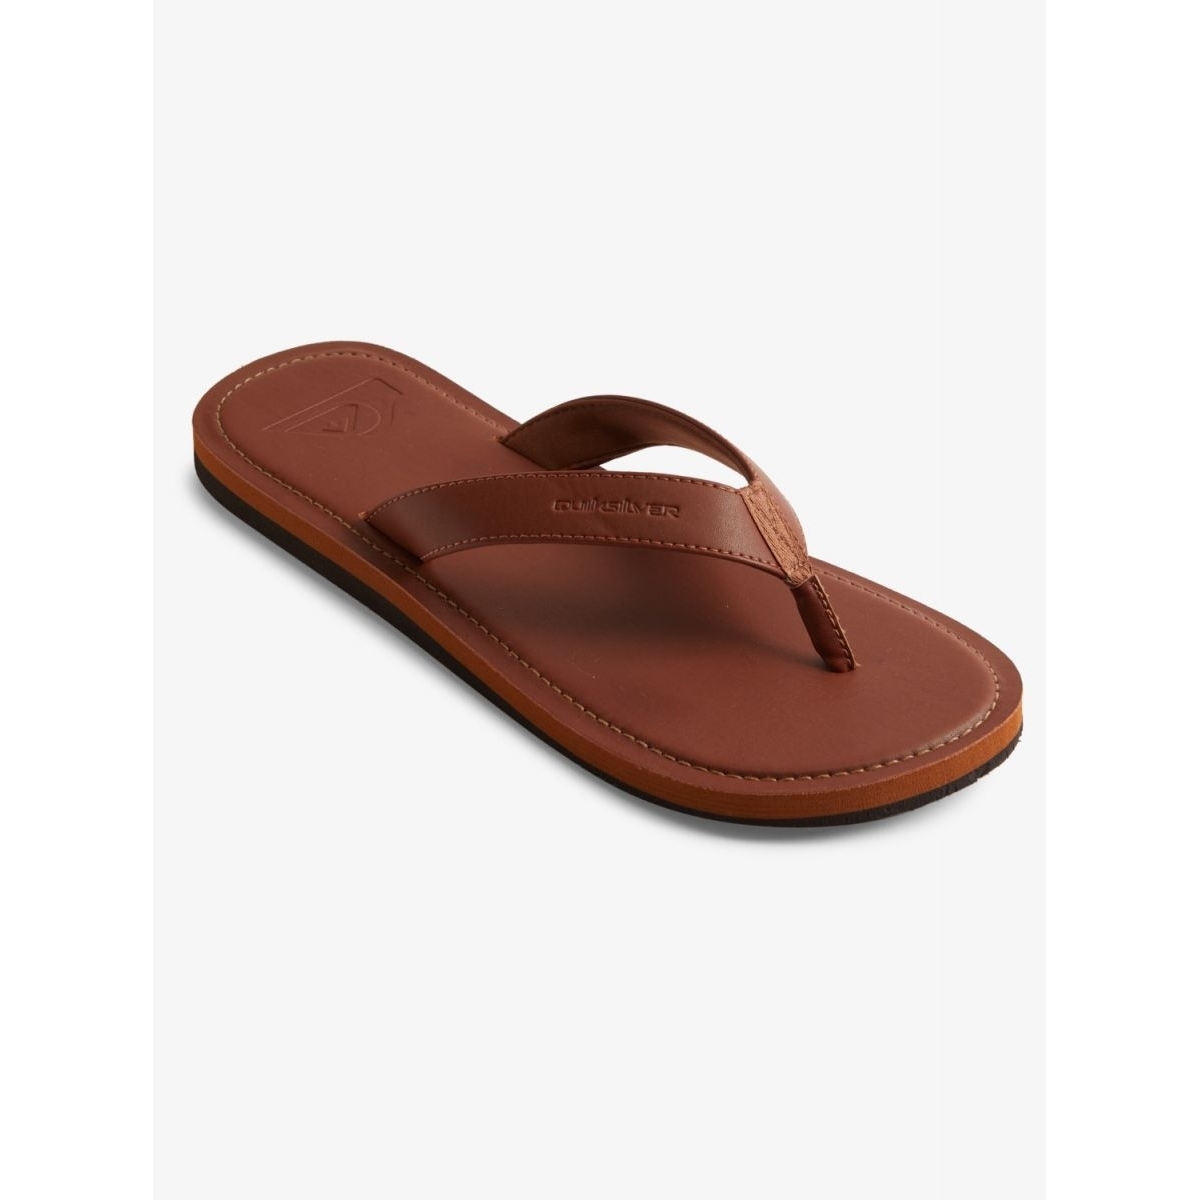 Quiksilver Men's Molokai Nubuck Flip Flop Sandals Tan Solid - AQYL100960-TKD0 TAN SOLID - TAN SOLID, 8